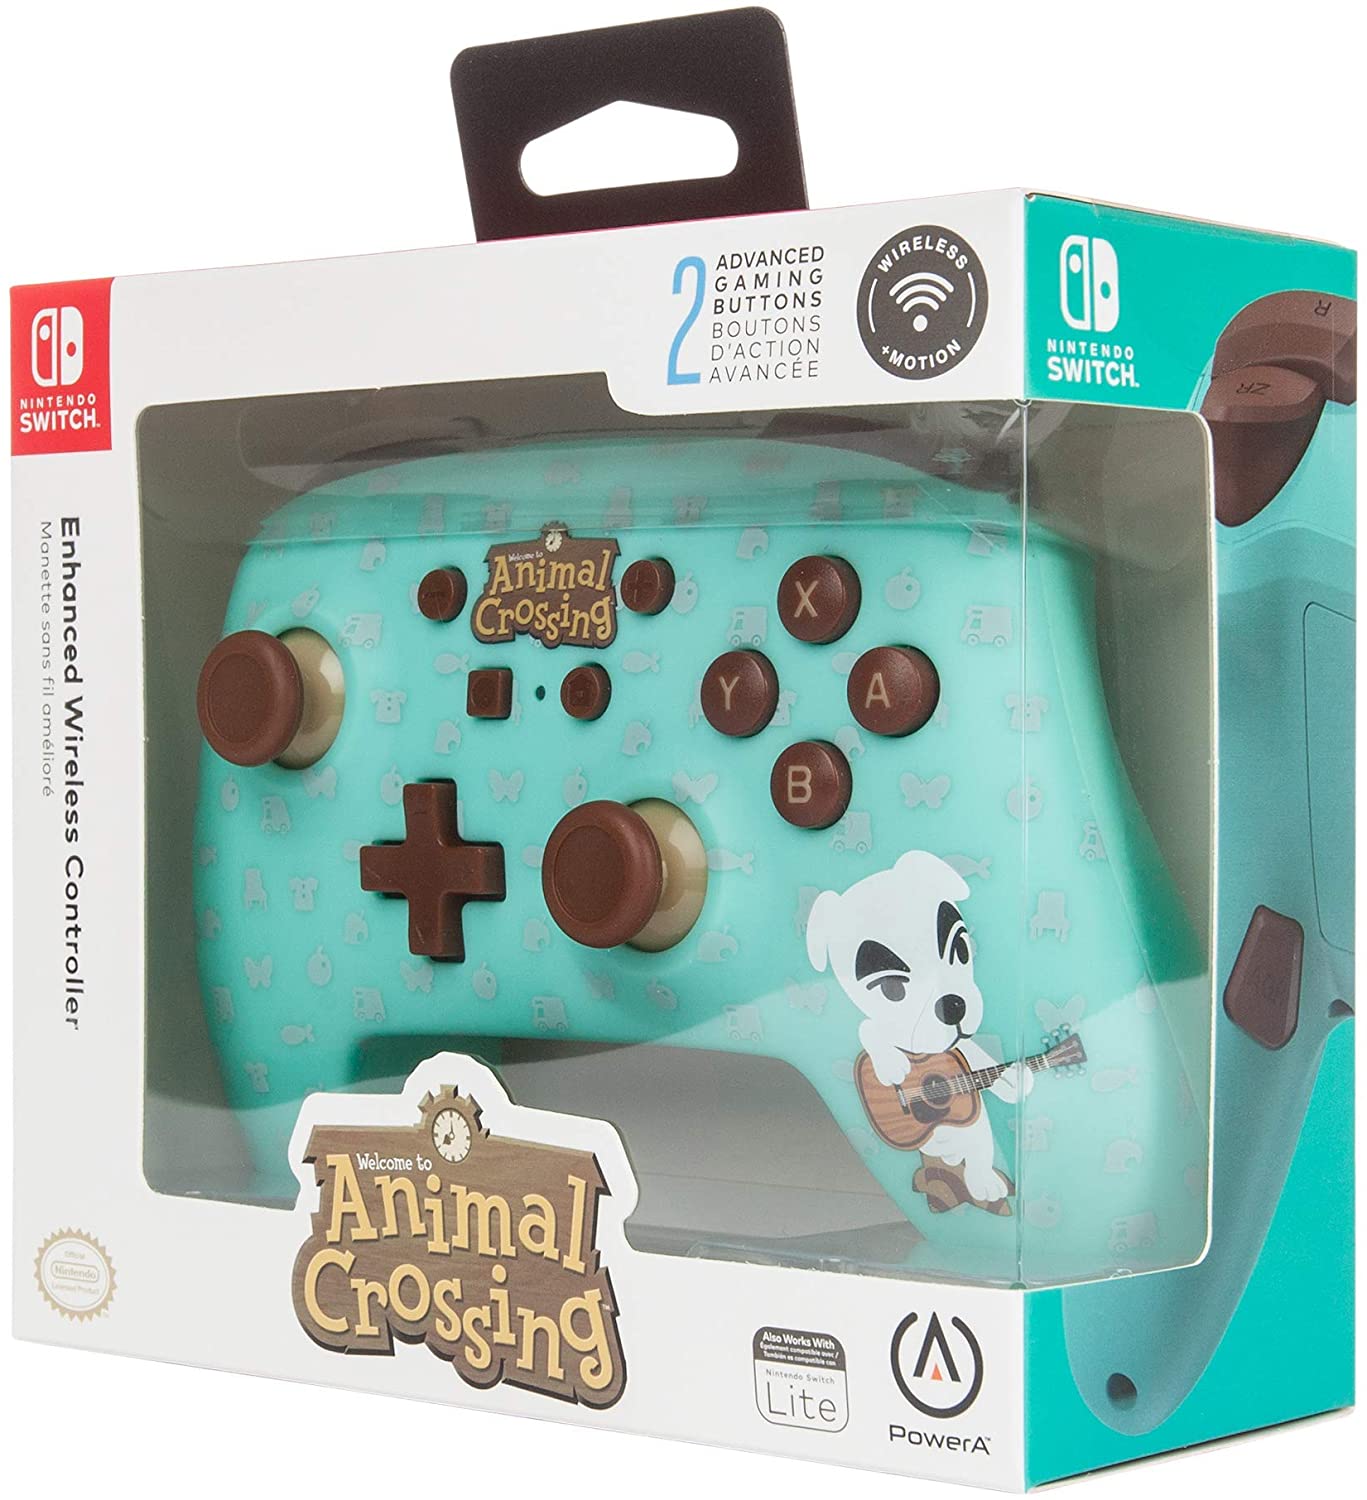 Nintendo Switch KK Slider Animal Crossing Enhanced Wireless Controller - Green/Brown